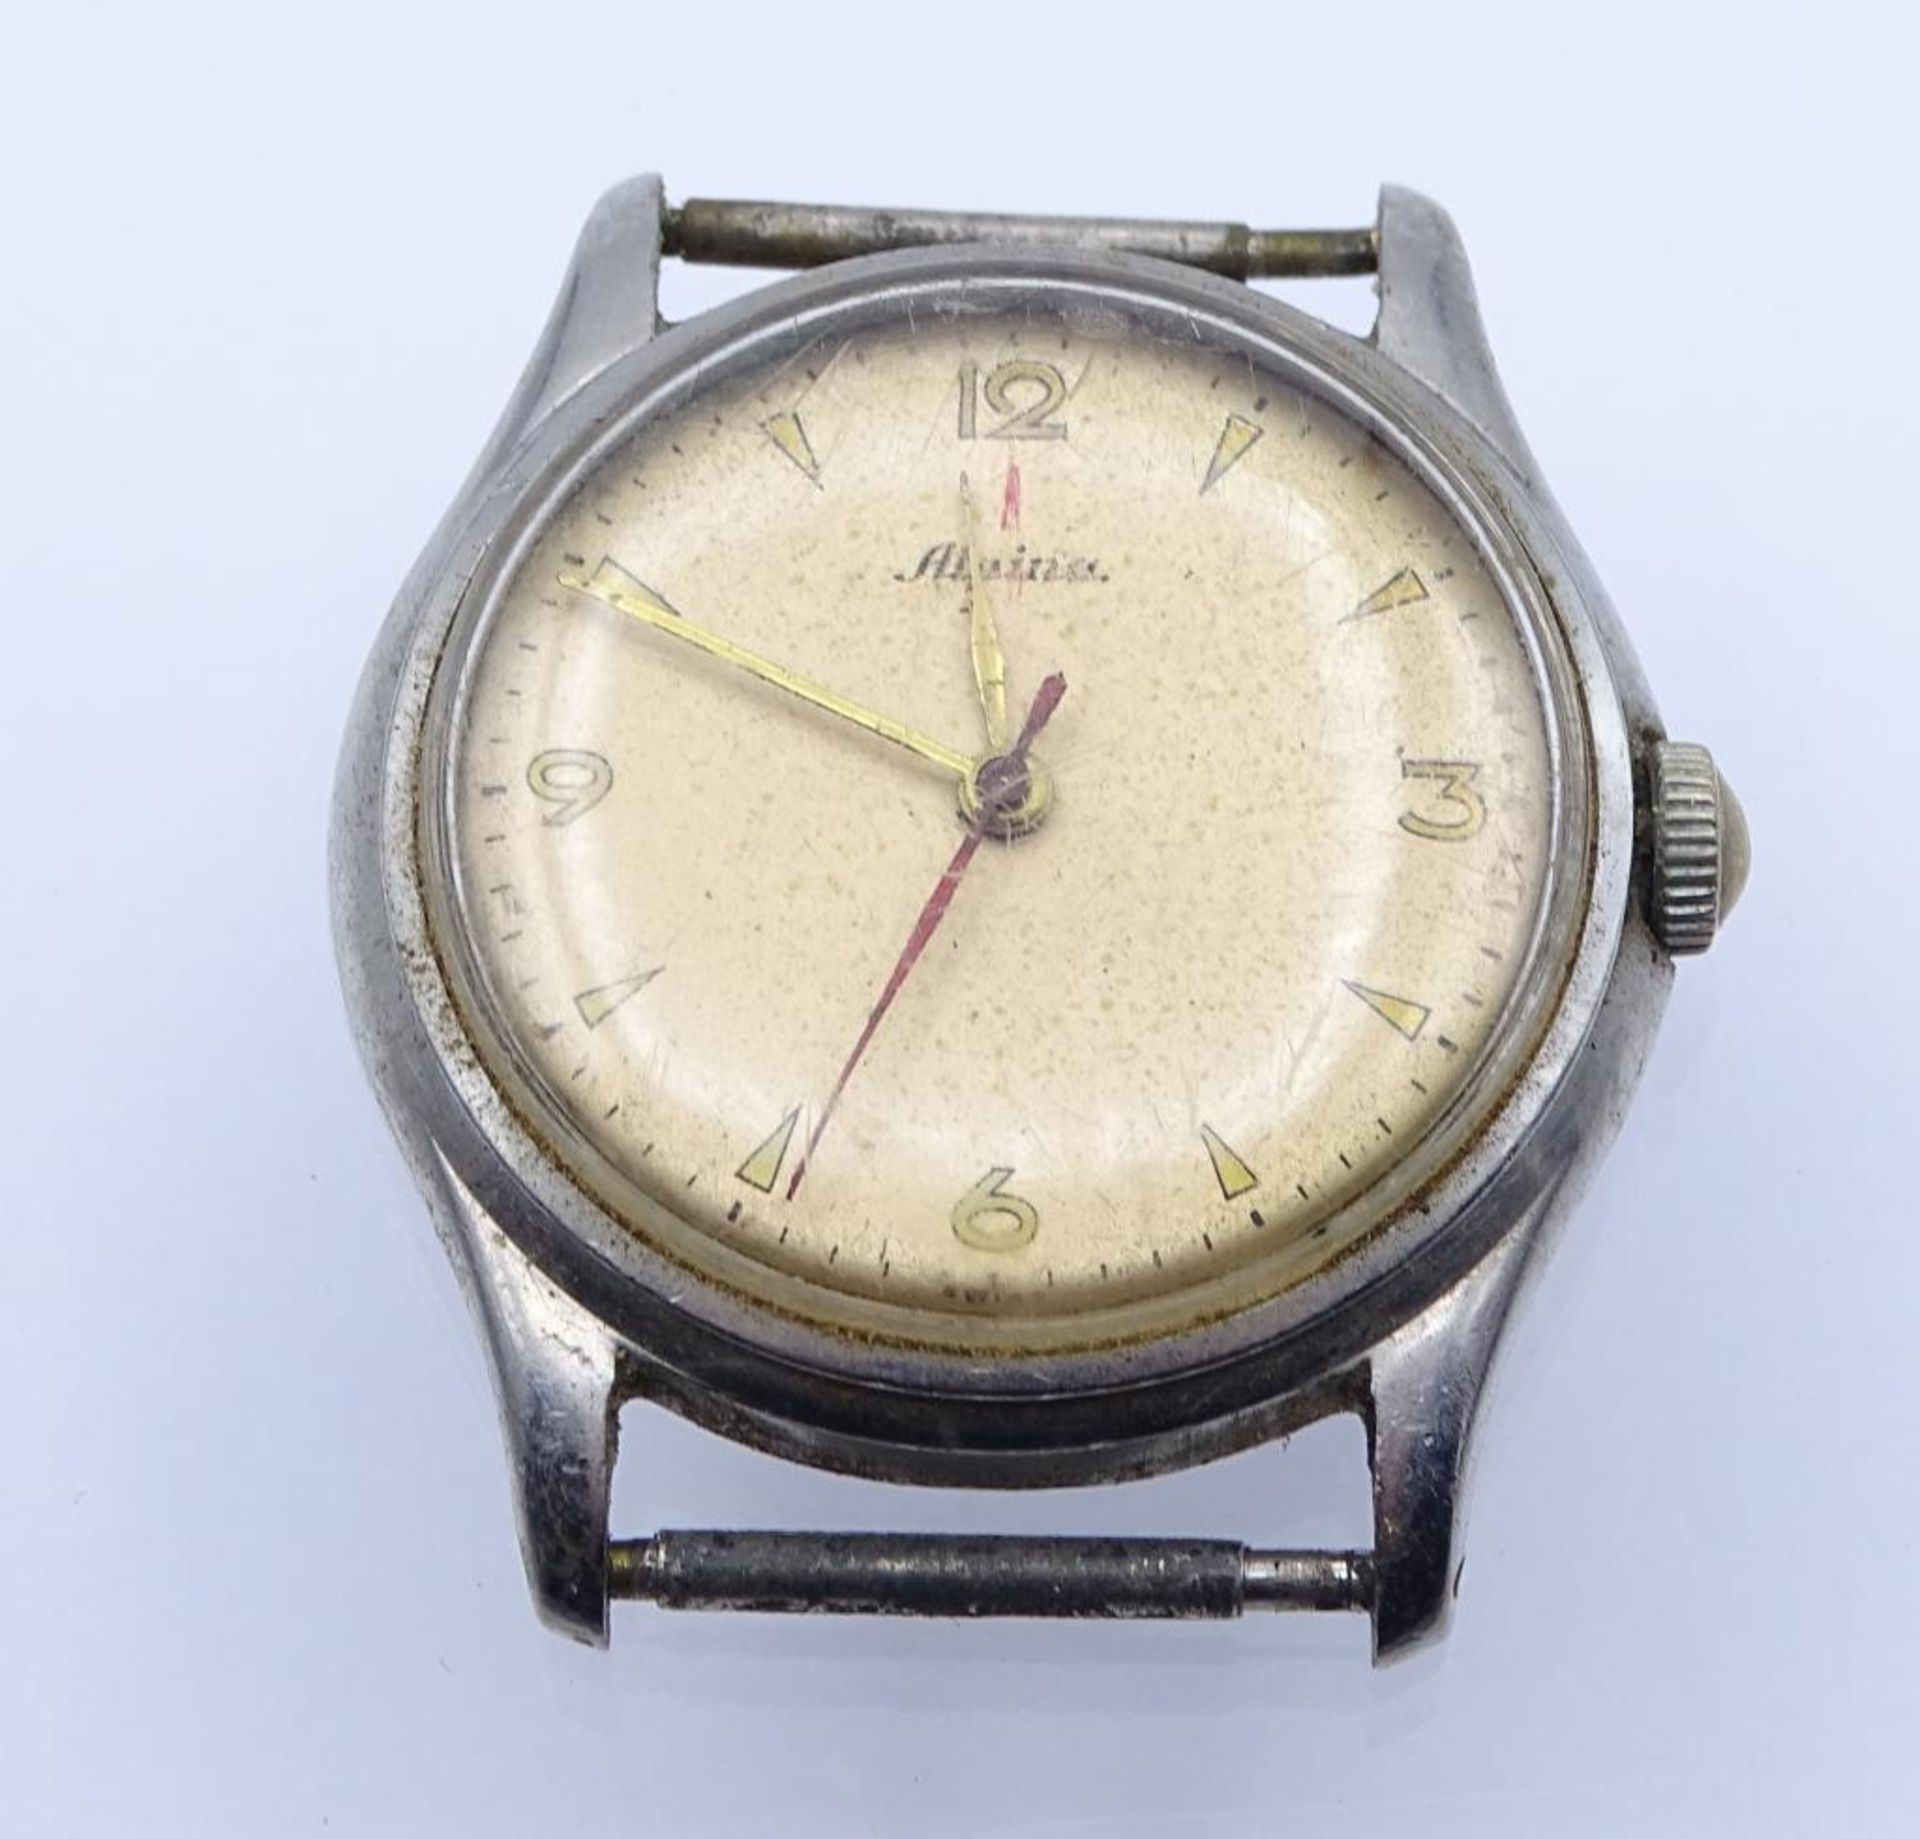 Armbanduhr "Alpina",Cal. 588,mechanisch,Werk läuft,Edelstahl,Gehäuse d-32mm,Tragespuren,ohne